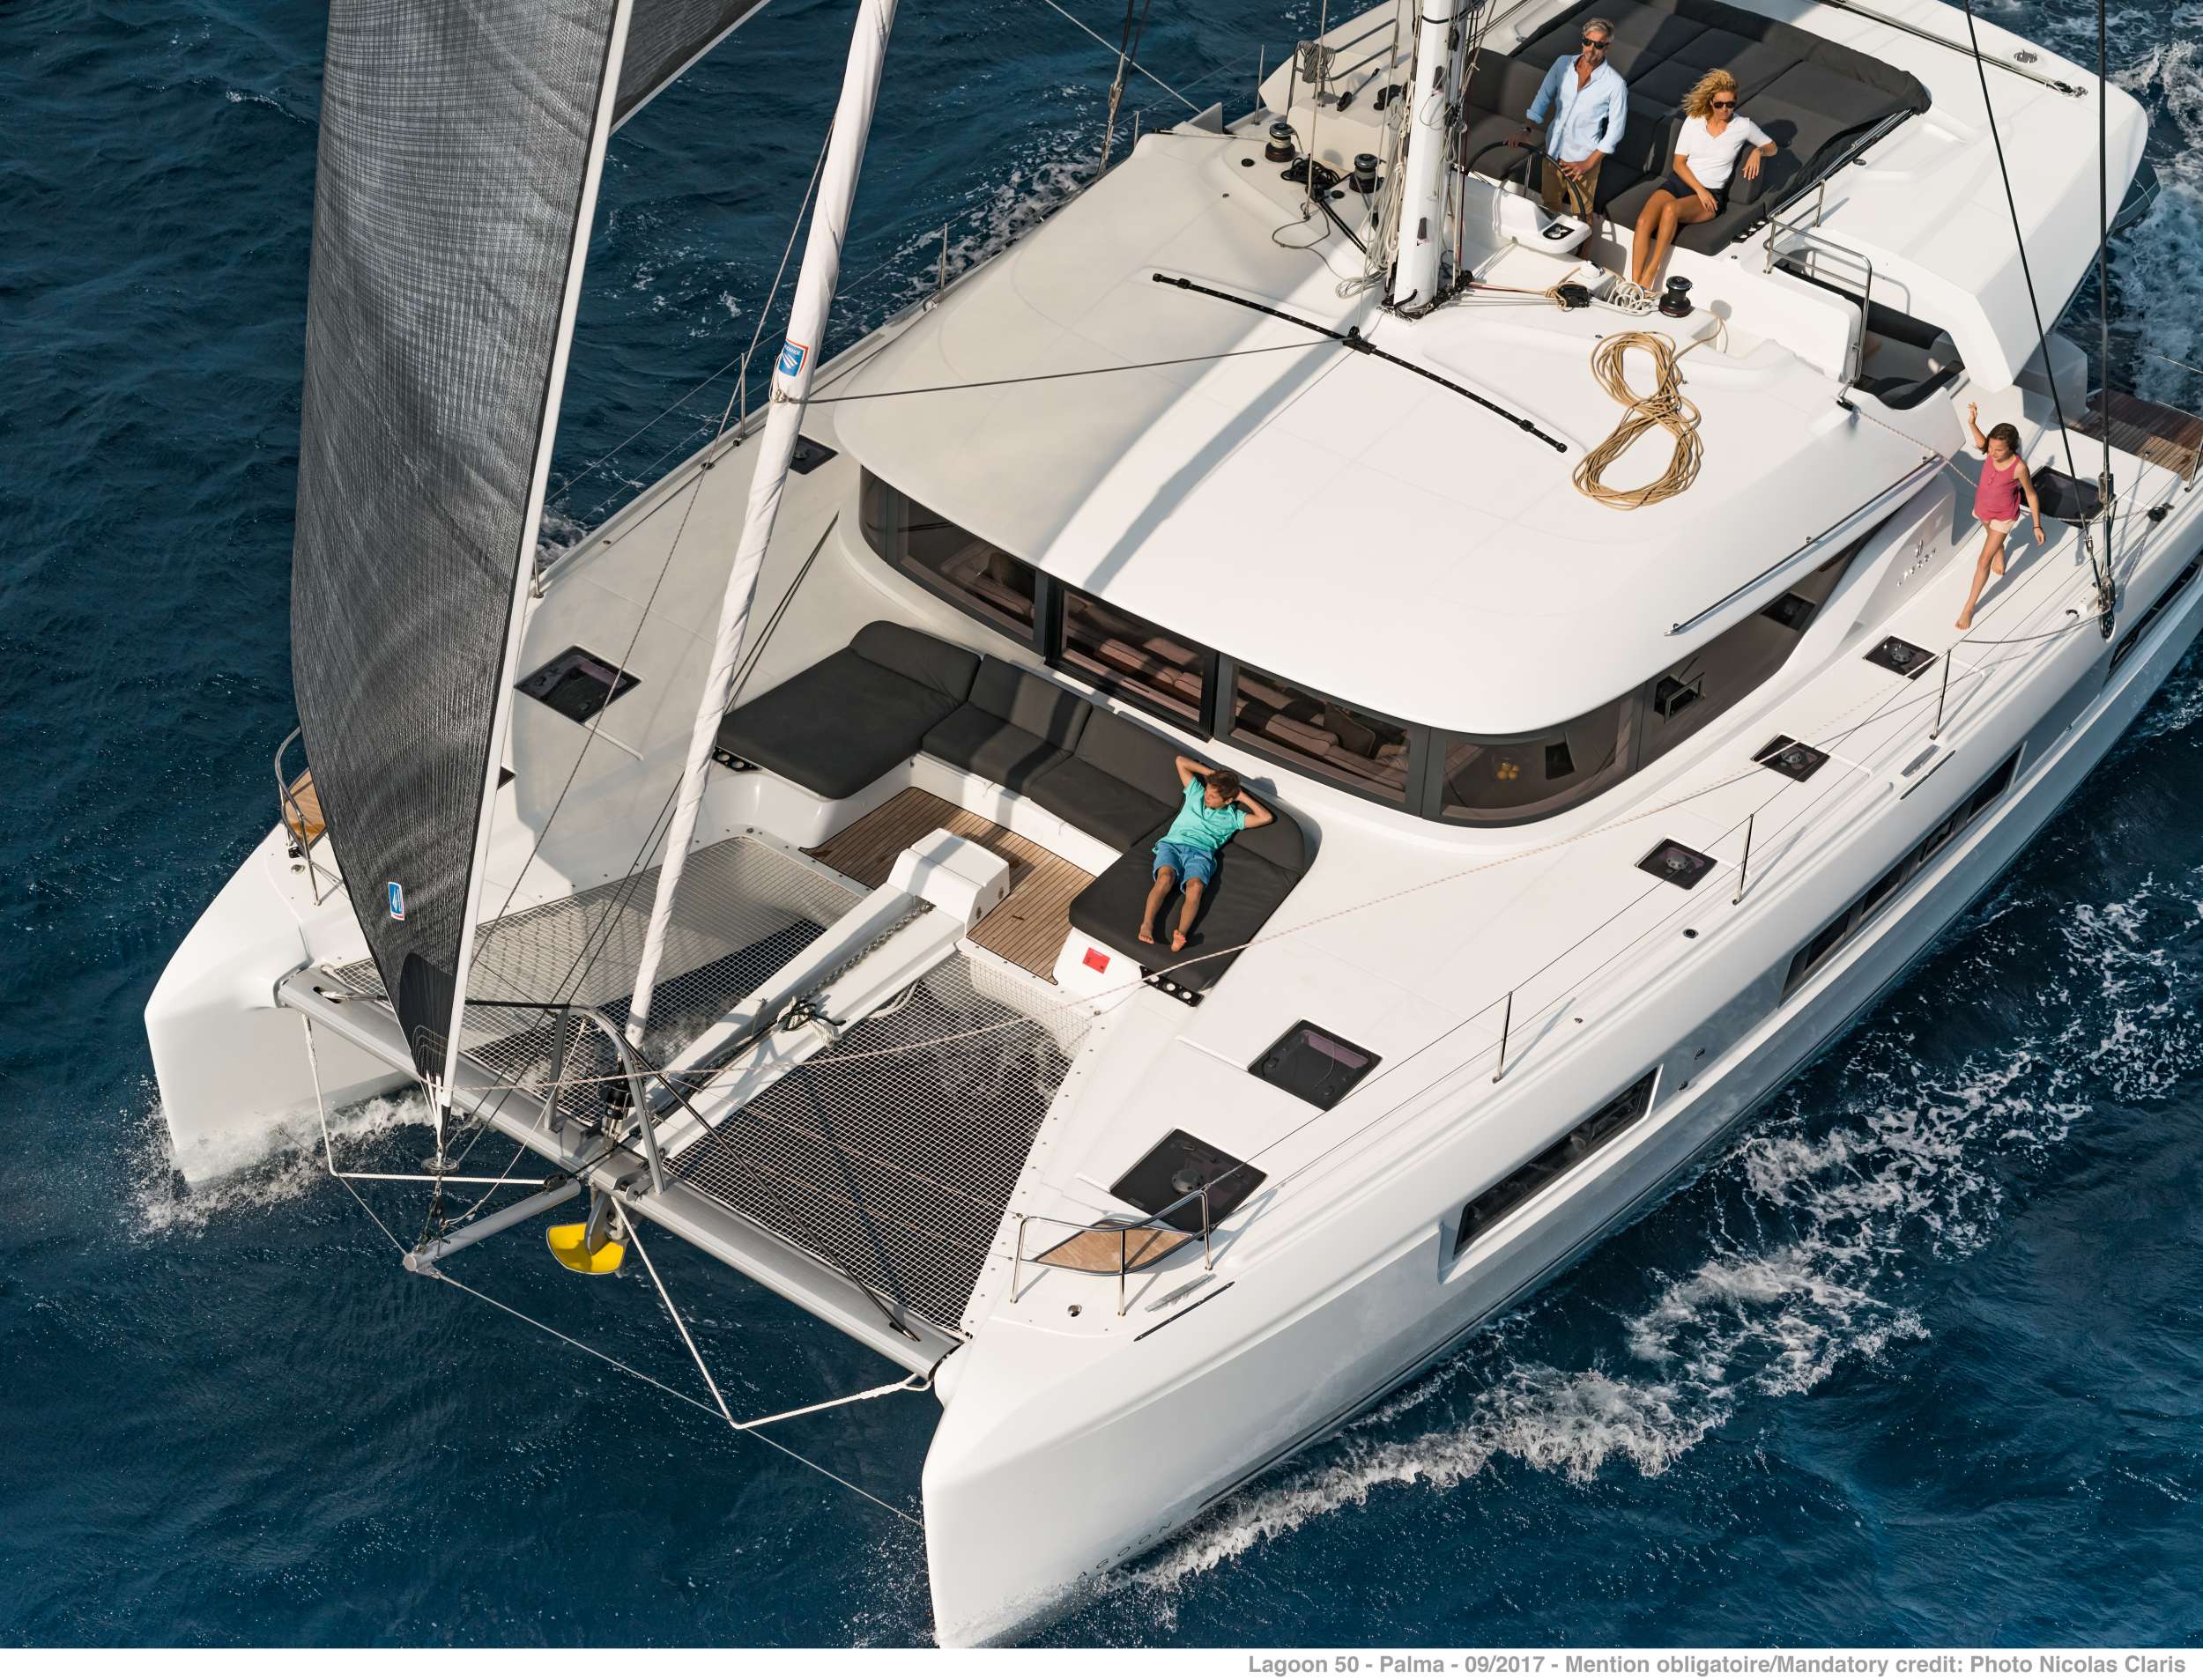 ONEIDA 2 - Yacht Charter Cyclades & Boat hire in Greece 6